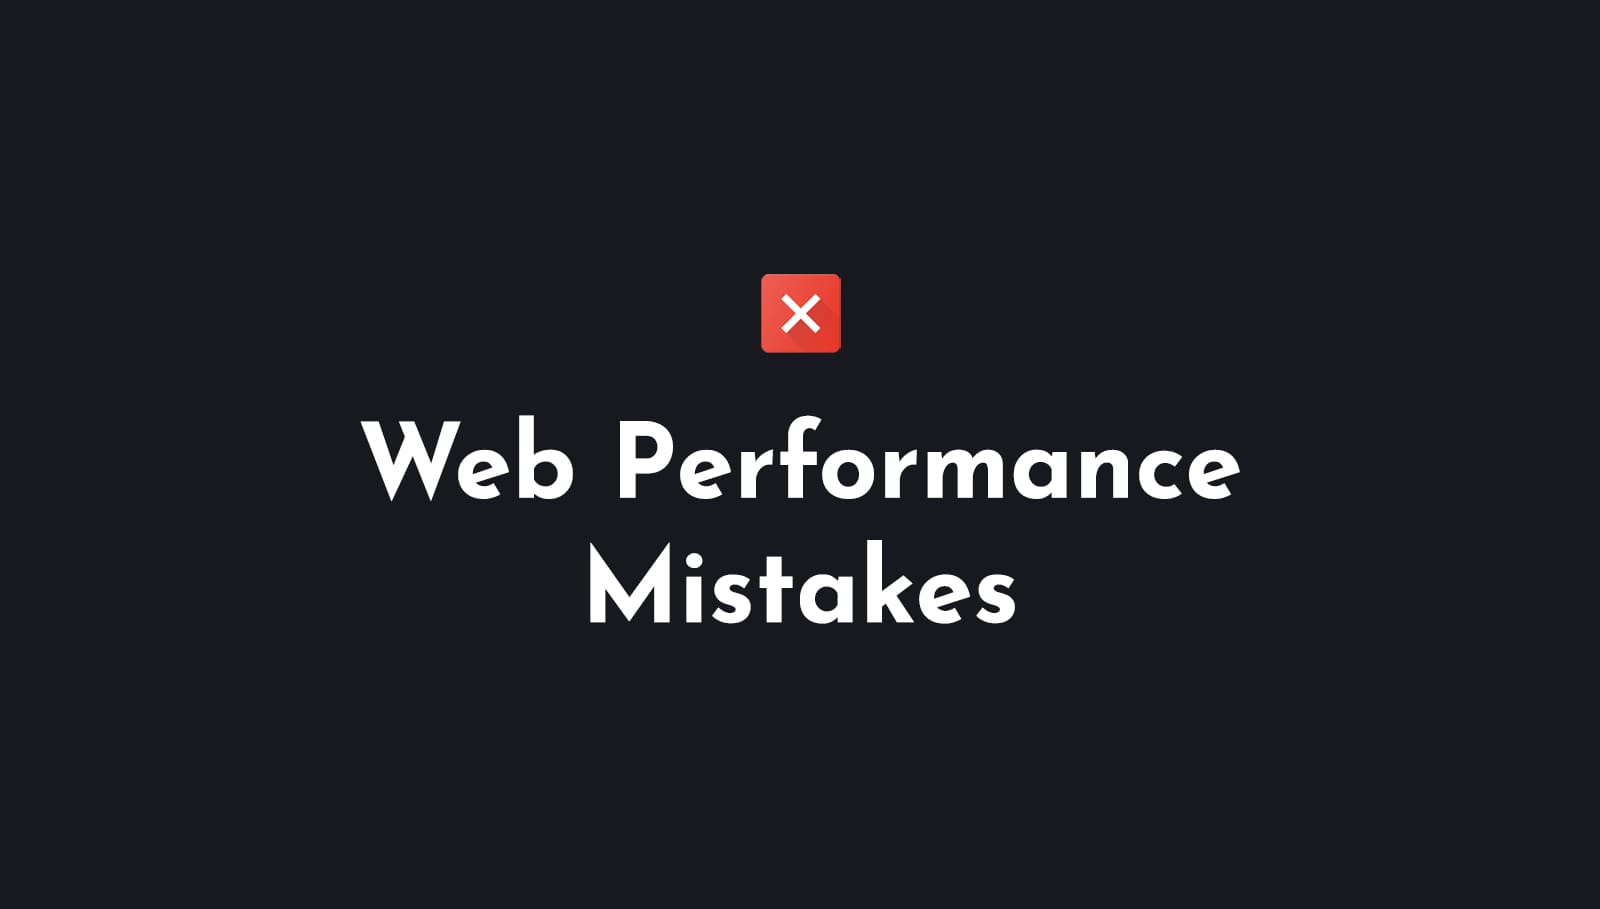 Web Performance Mistakes